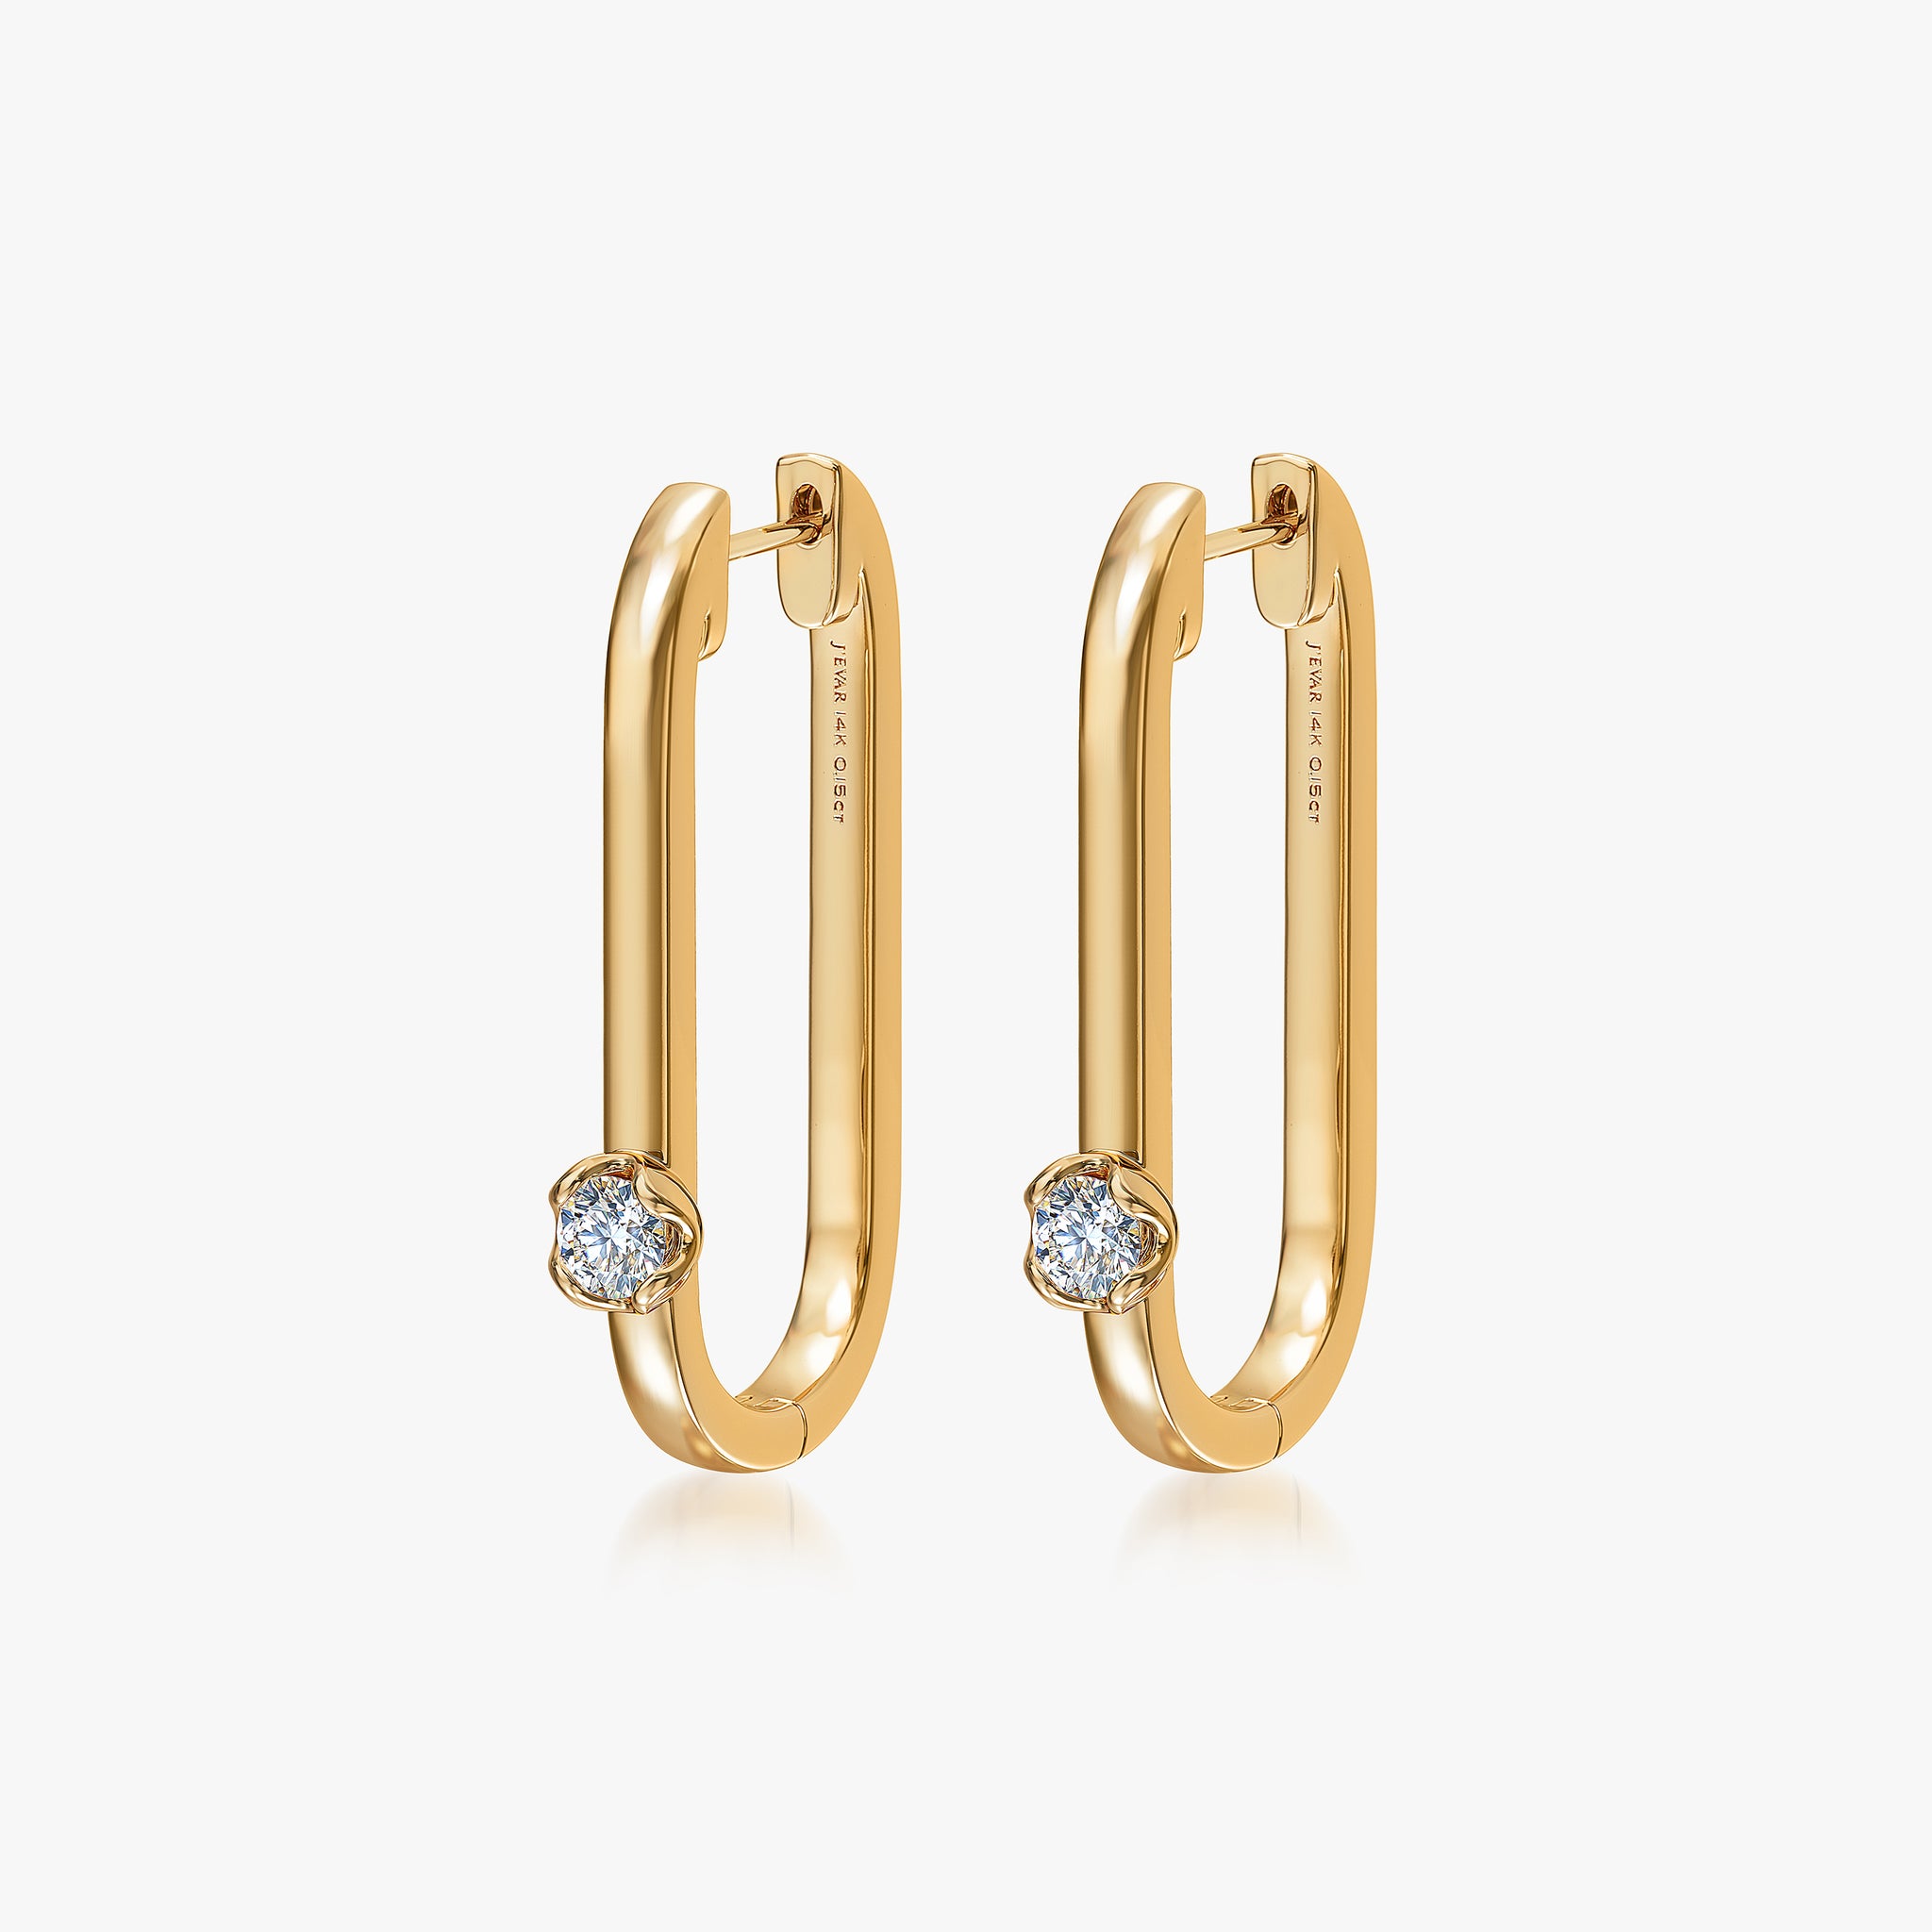 J'EVAR 14KT Yellow Gold U-shaped Hoop ALTR Lab Grown Diamond Earrings Perspective View